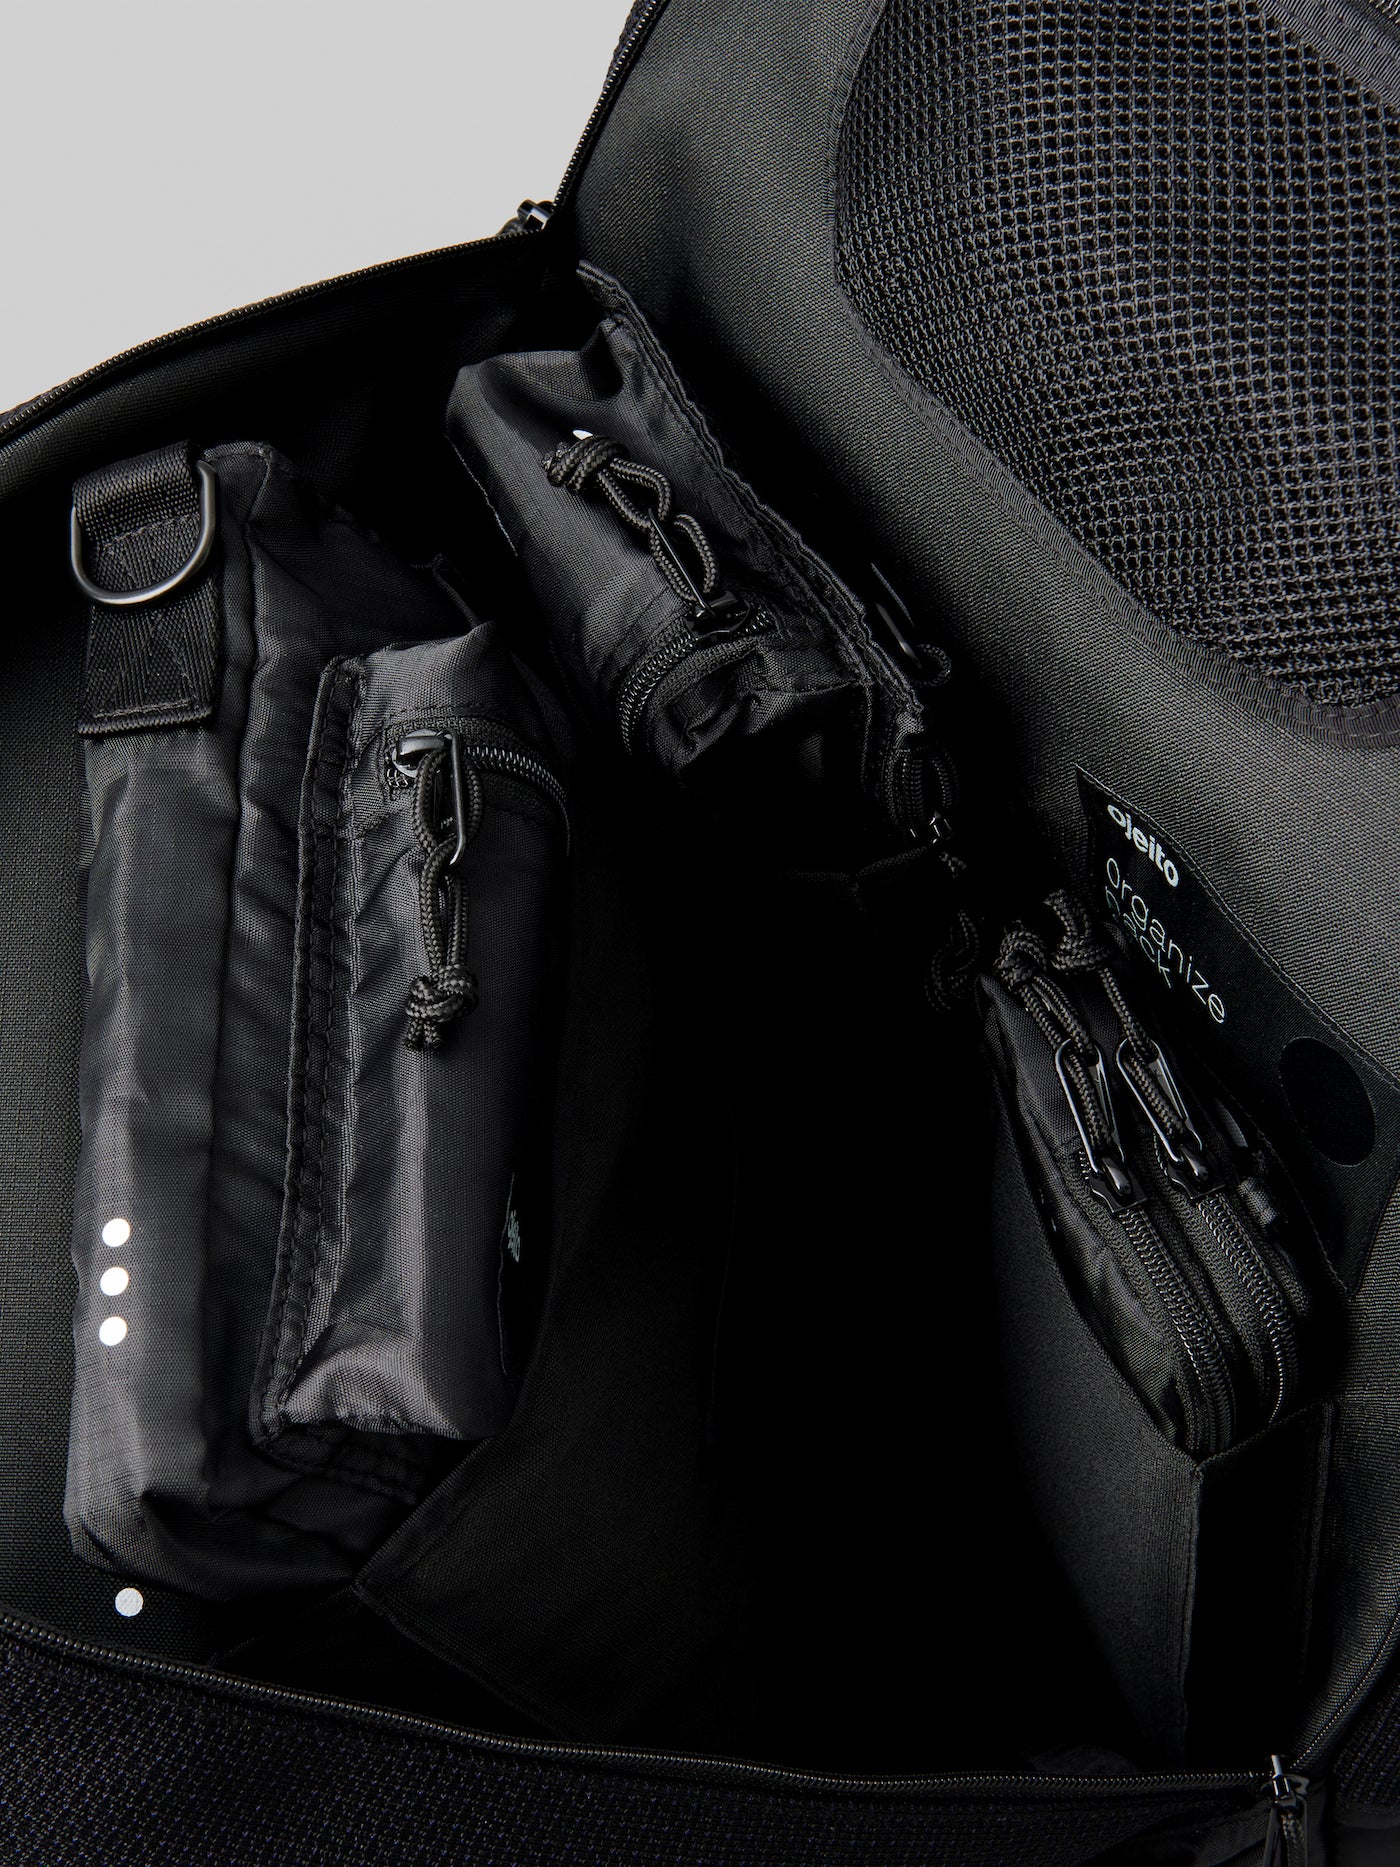 interior shot of packed ojeito backpack go-kit in black